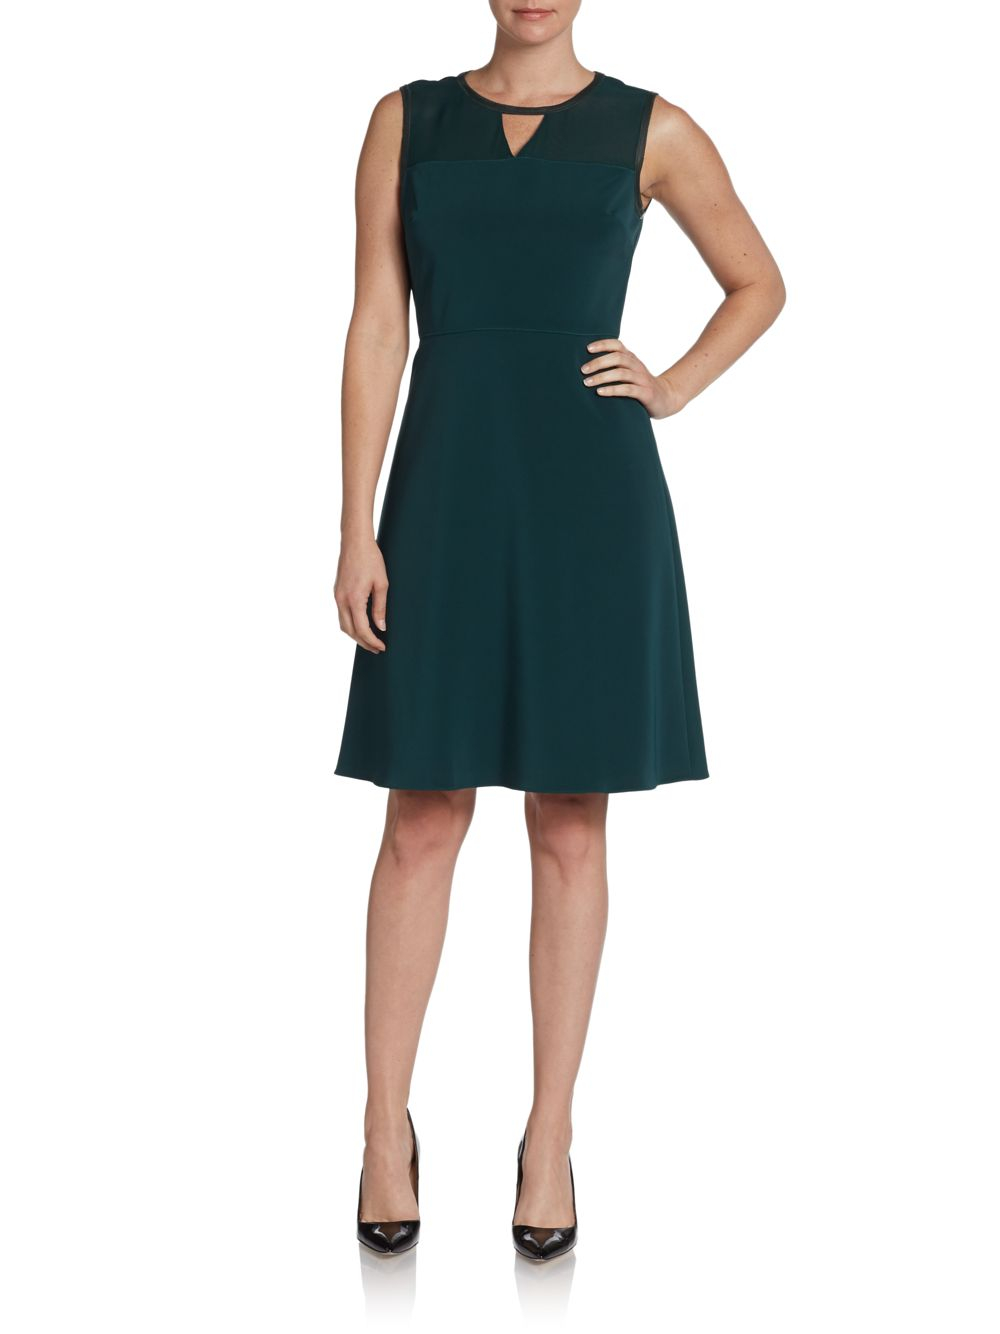 Lyst - Elie Tahari Sleeveless Keyhole-Front Dress in Green